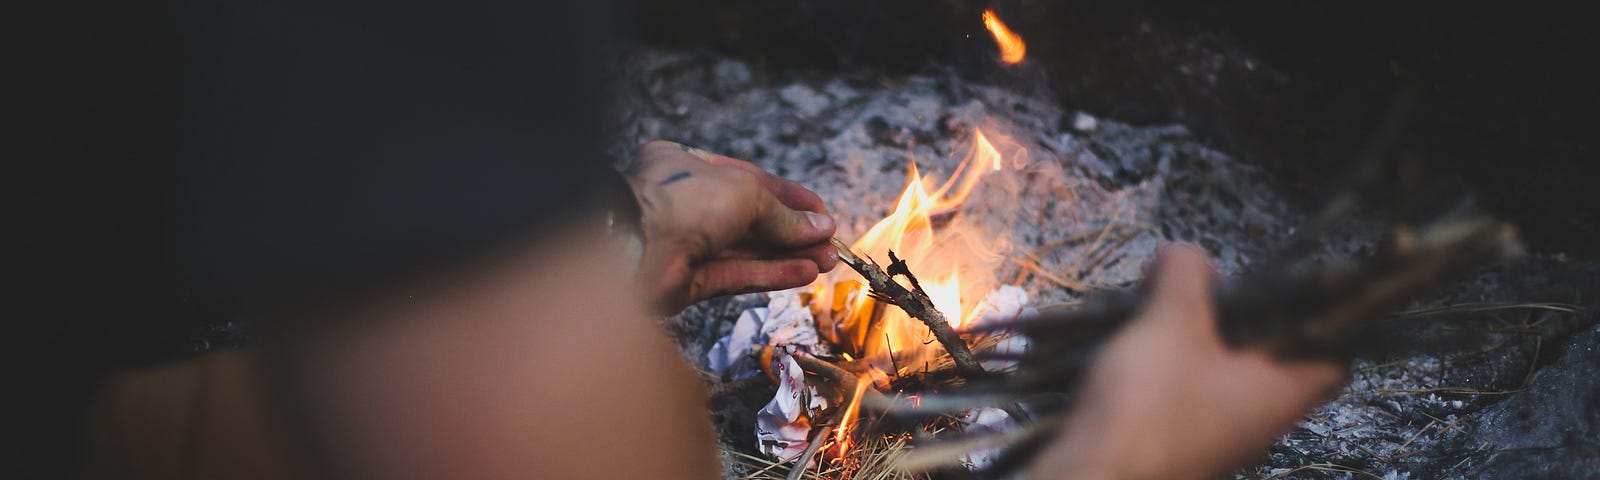 man adding sticks to a fire